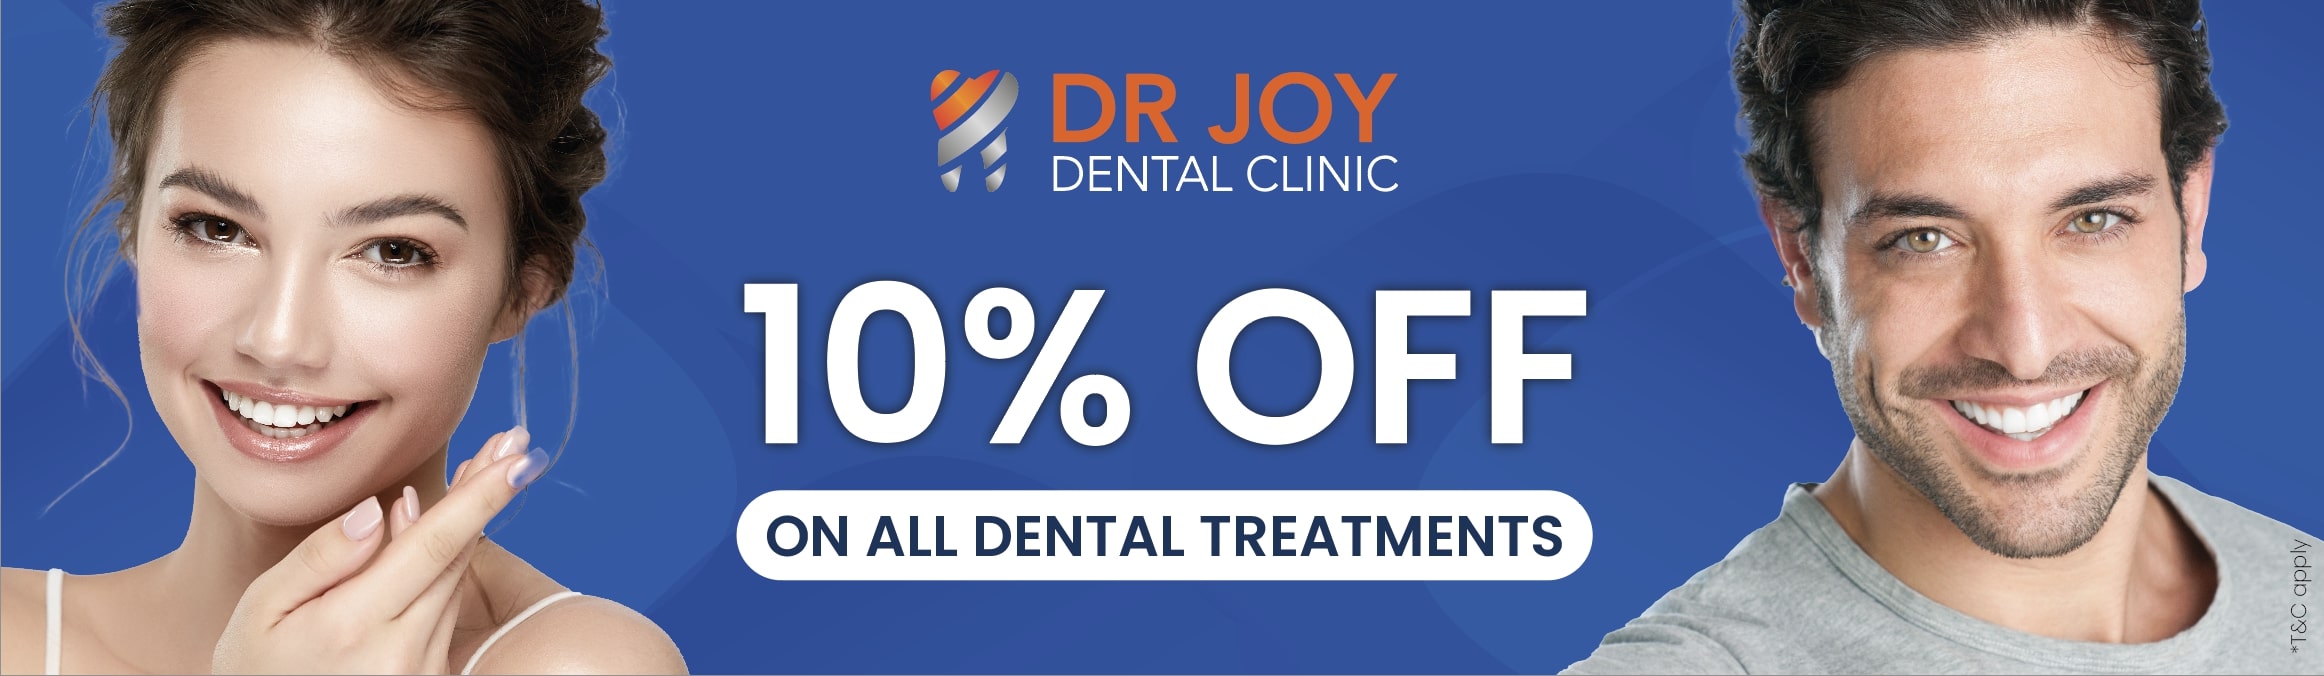 Dr Joy Dental Clinic